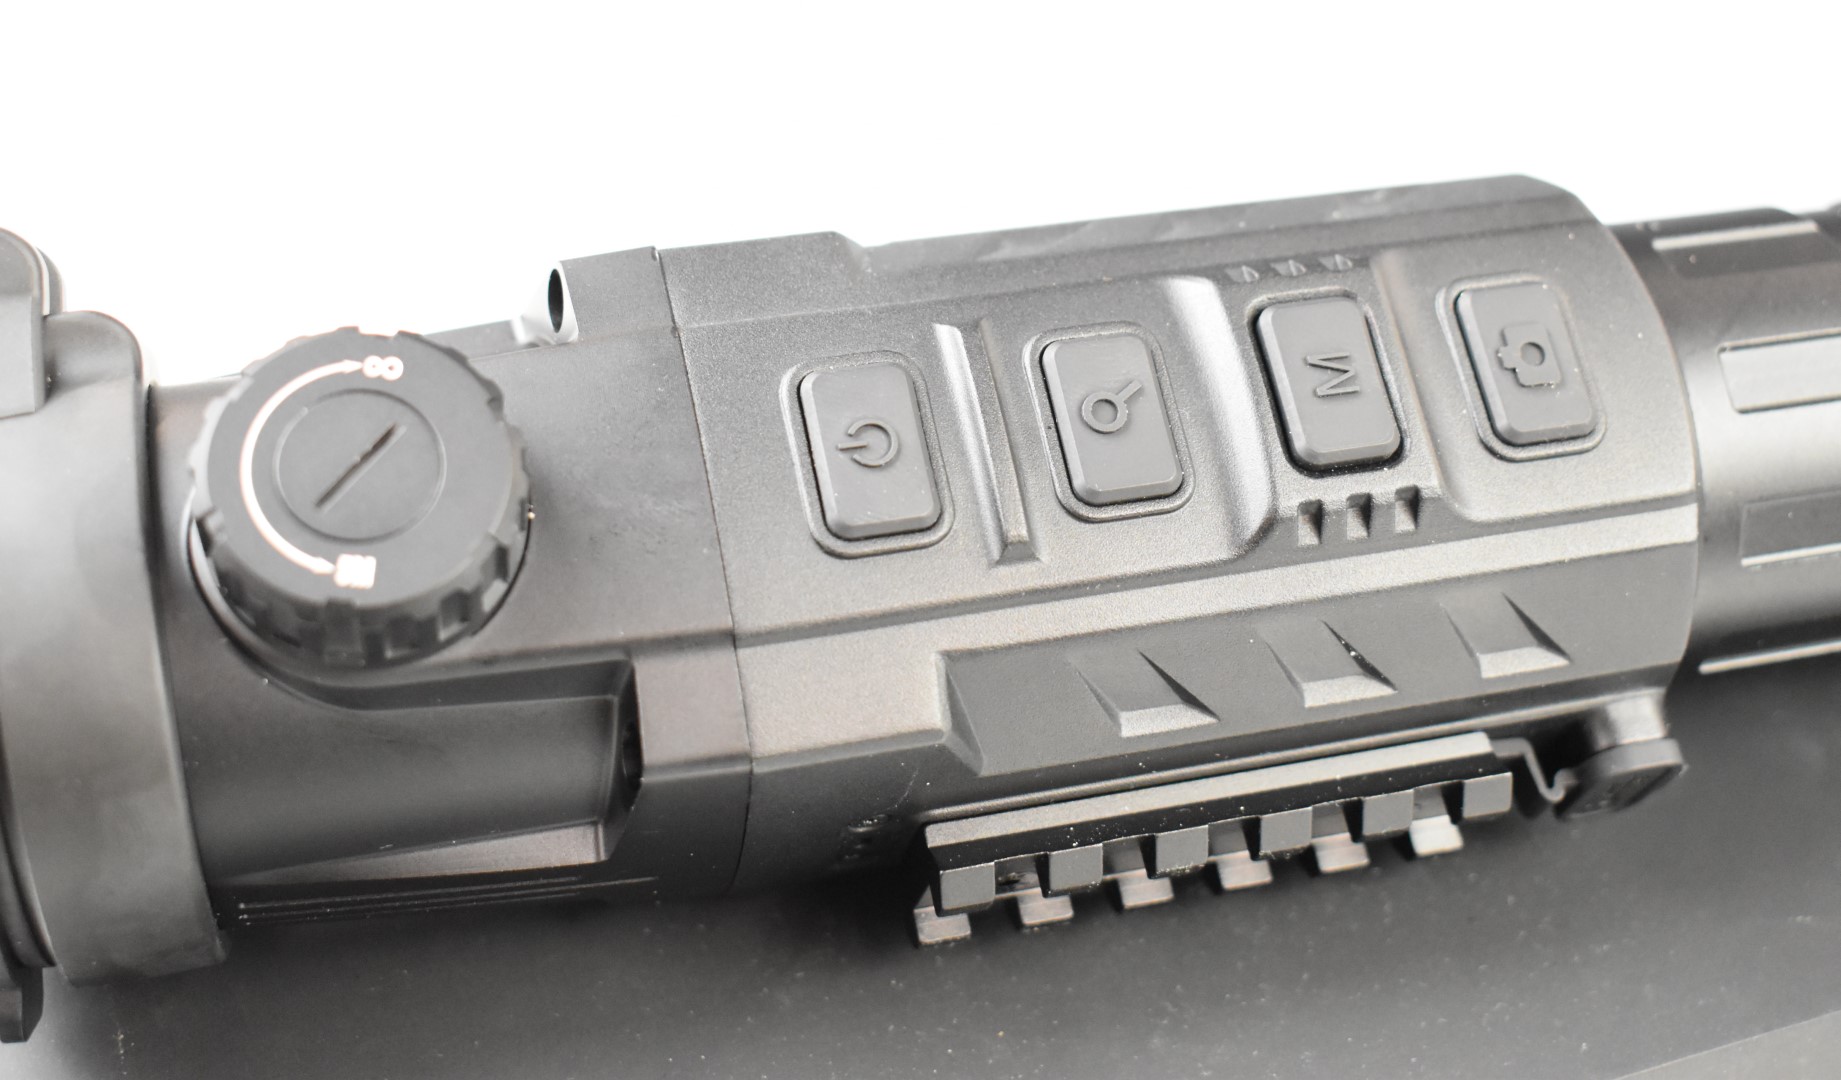 Rico RH50 Infiray thermal imaging rifle or similar scope, in original box - Image 3 of 7